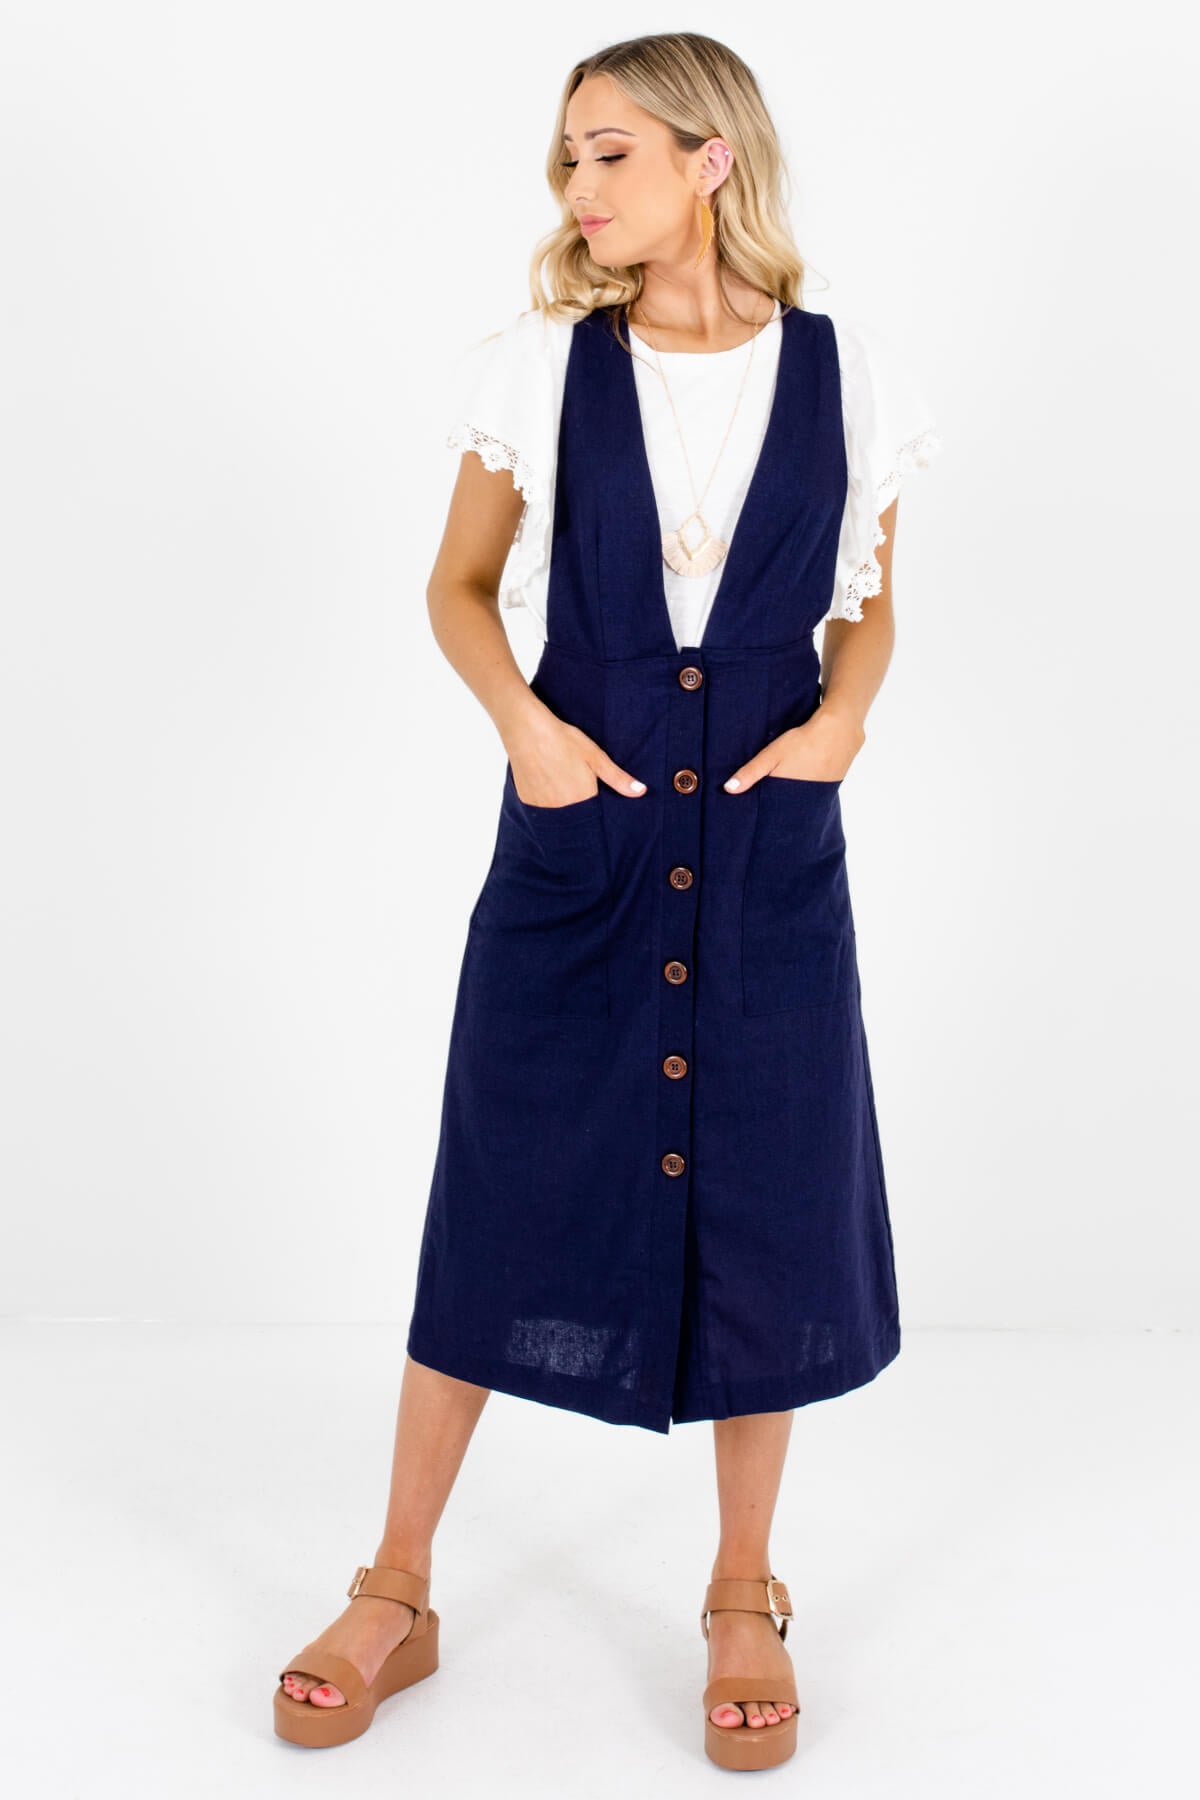 Women's Dark Blue Boutique Midi Dresses with Pockets